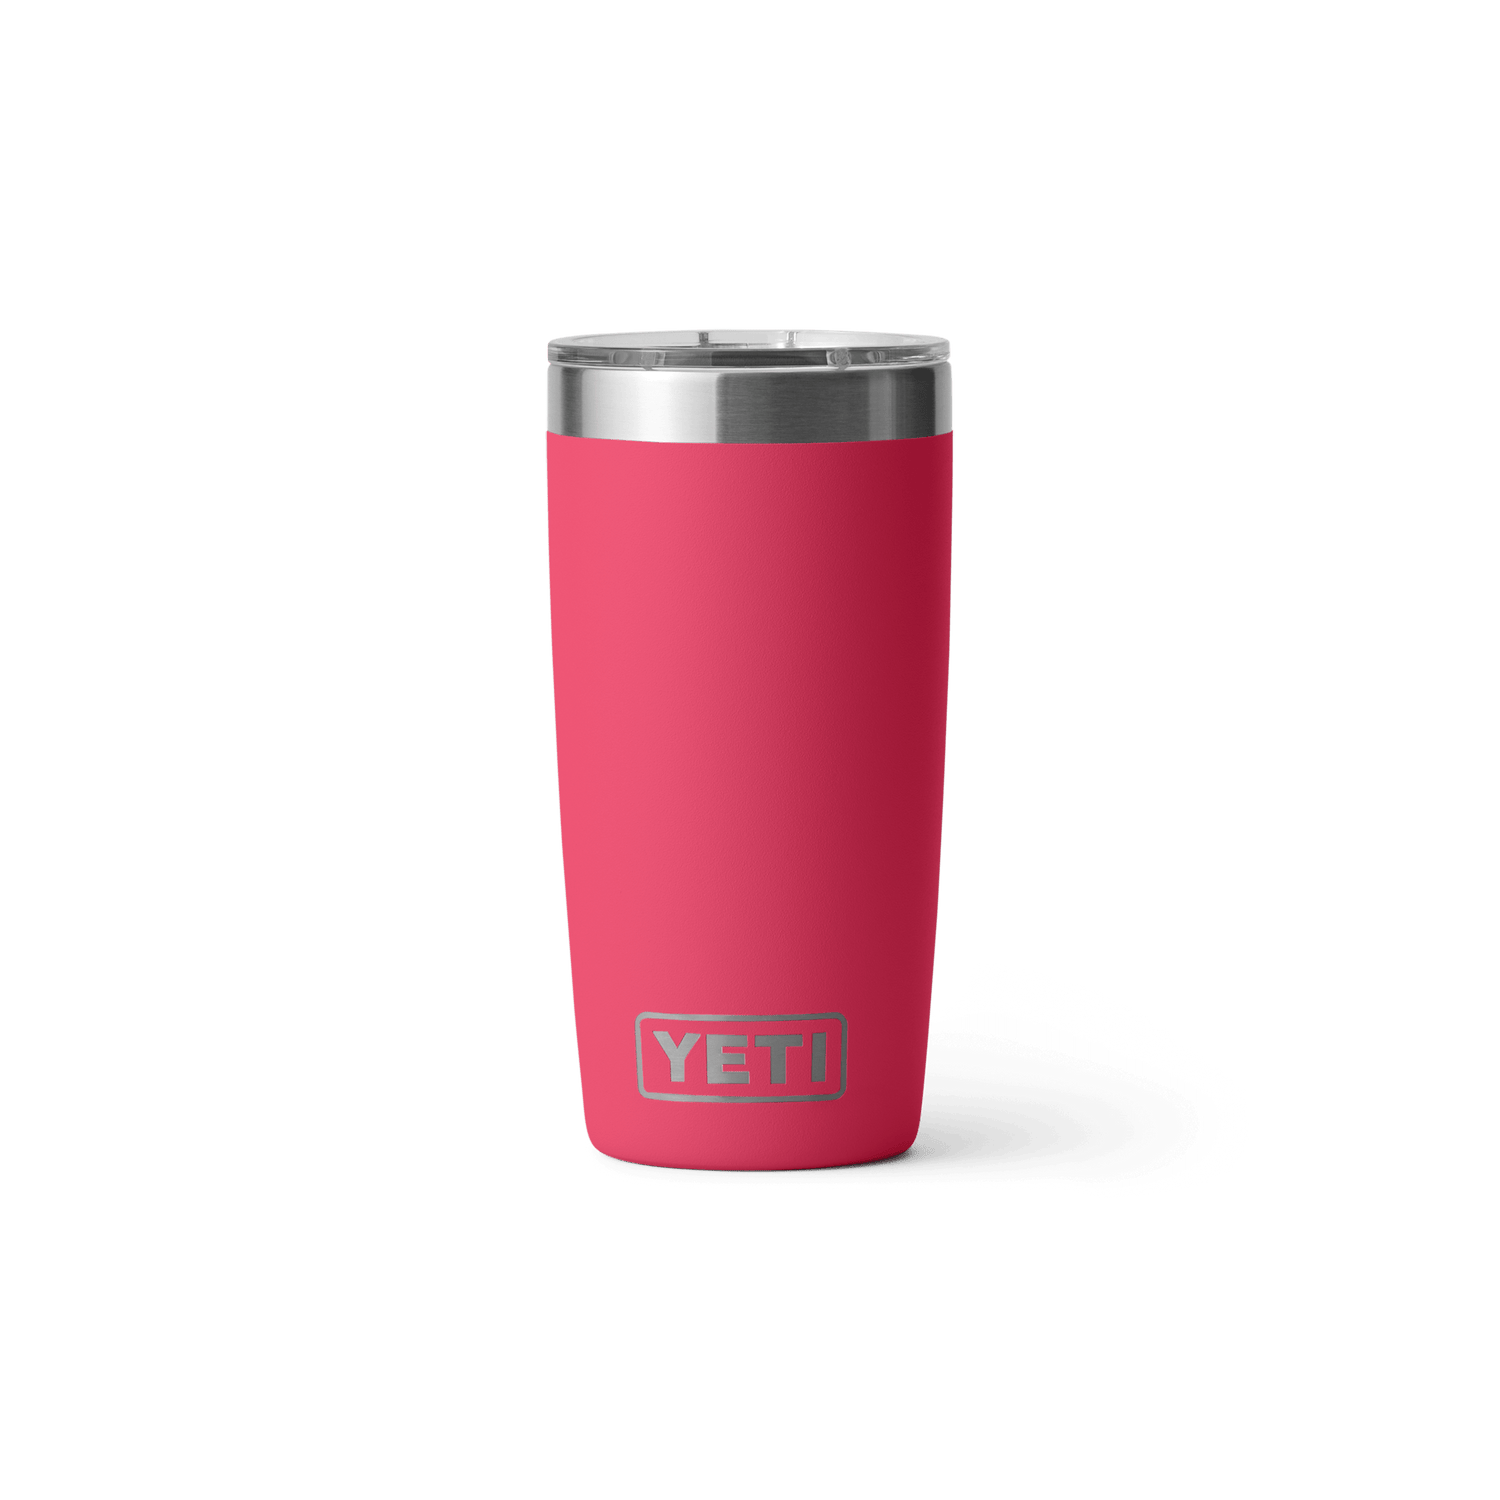 YETI Rambler Drinkware: Bottles, Mugs, Jugs, And More – YETI UK LIMITED